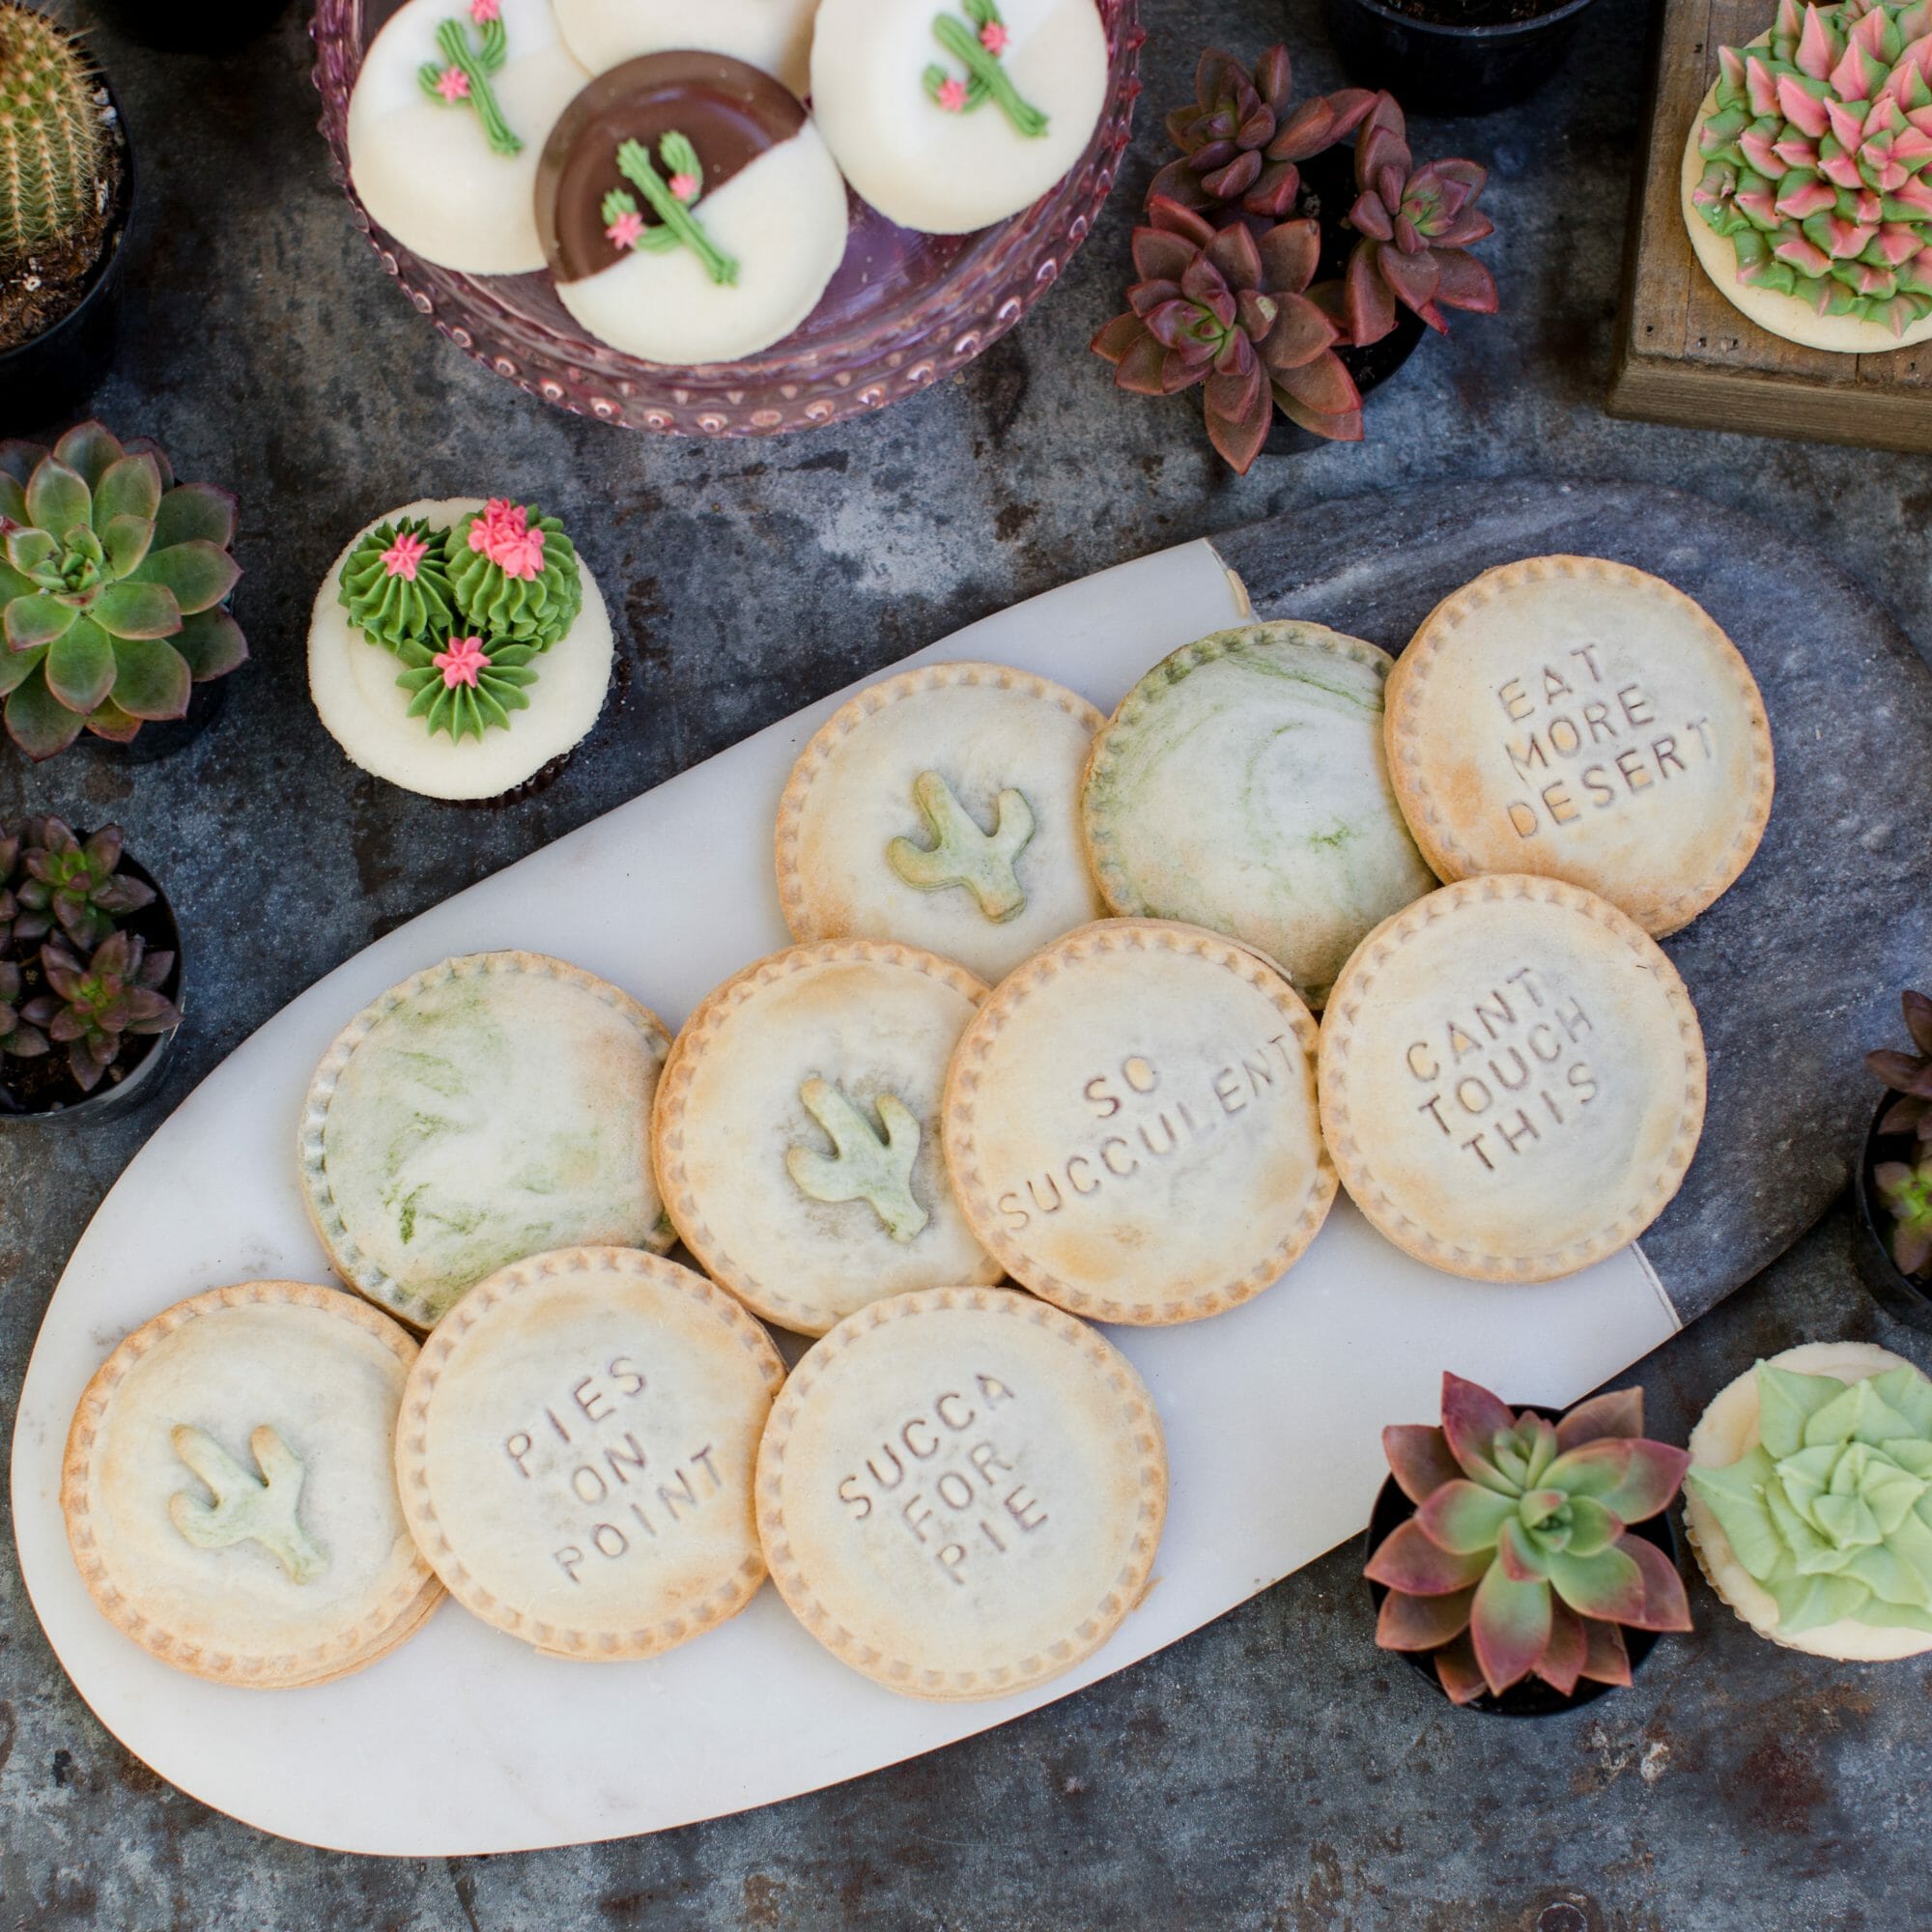 Succulent Themed Desserts || JennyCookies.com #succulents #dessertideas #themedesserts #jennycookies